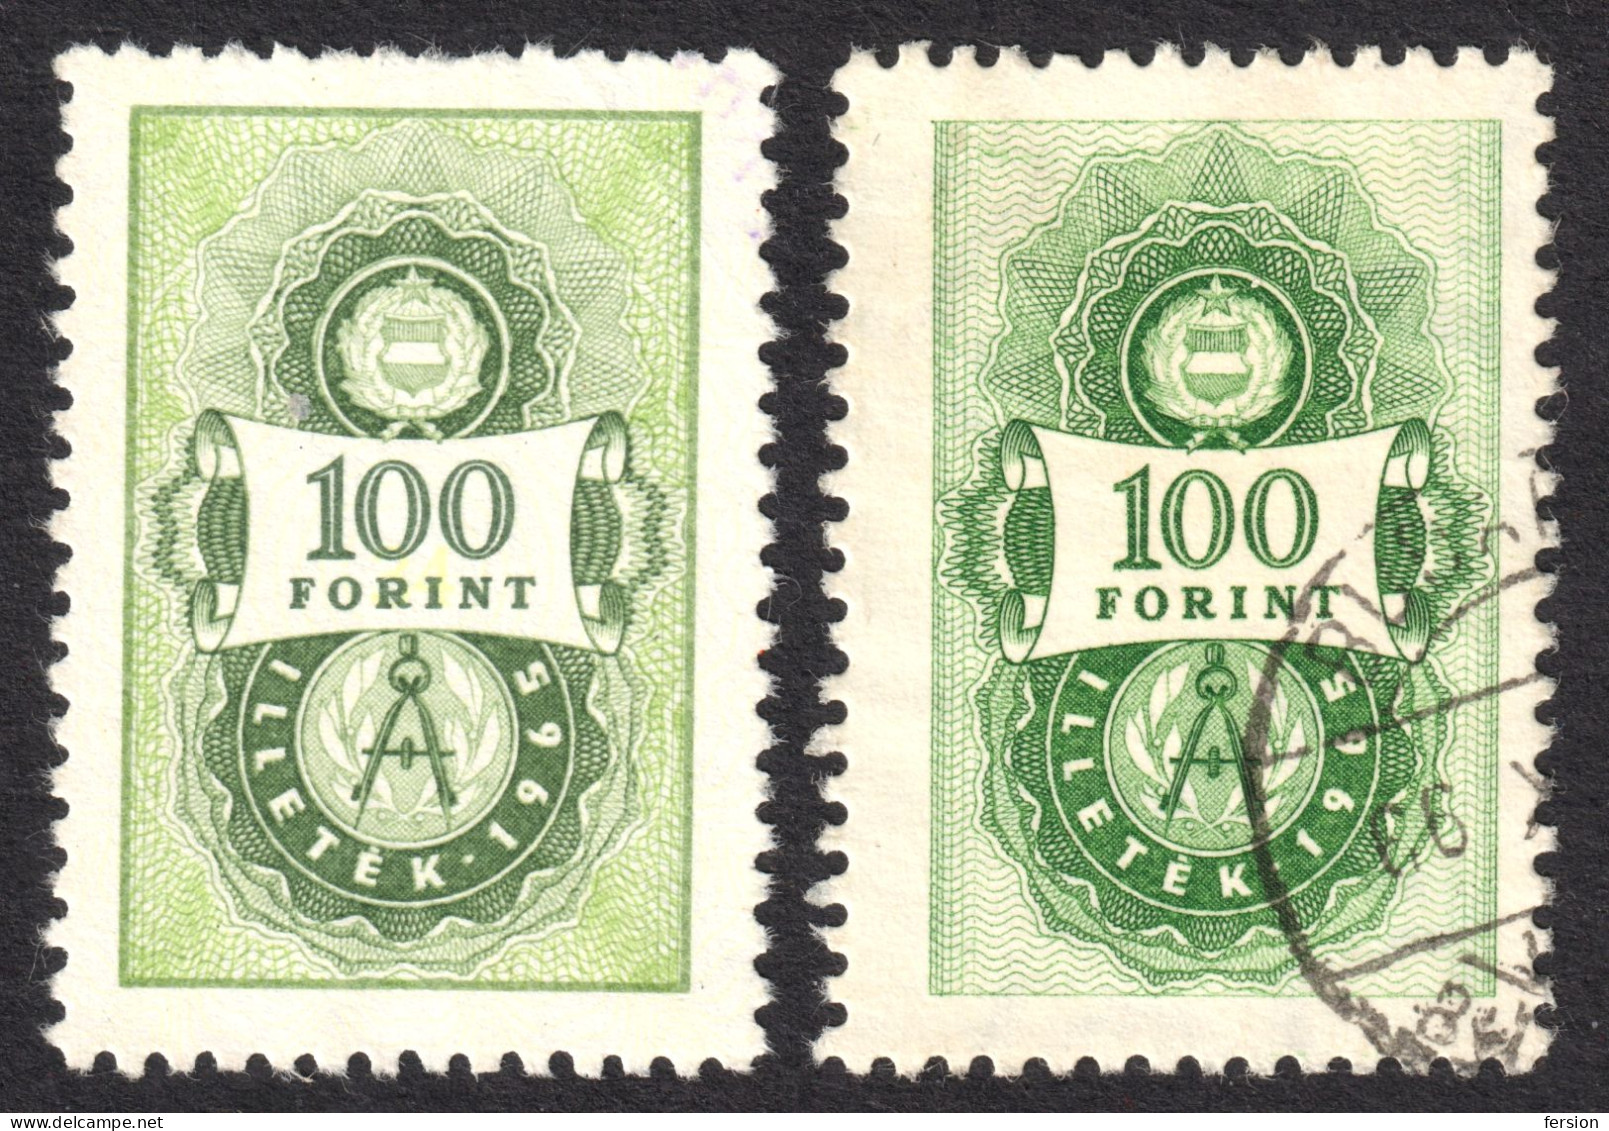 1967 Hungary Ungarn Hongrie - Revenue Fiscal Tax Stamp - 100 Ft - Fluorescent & Normal PAIR - Steuermarken